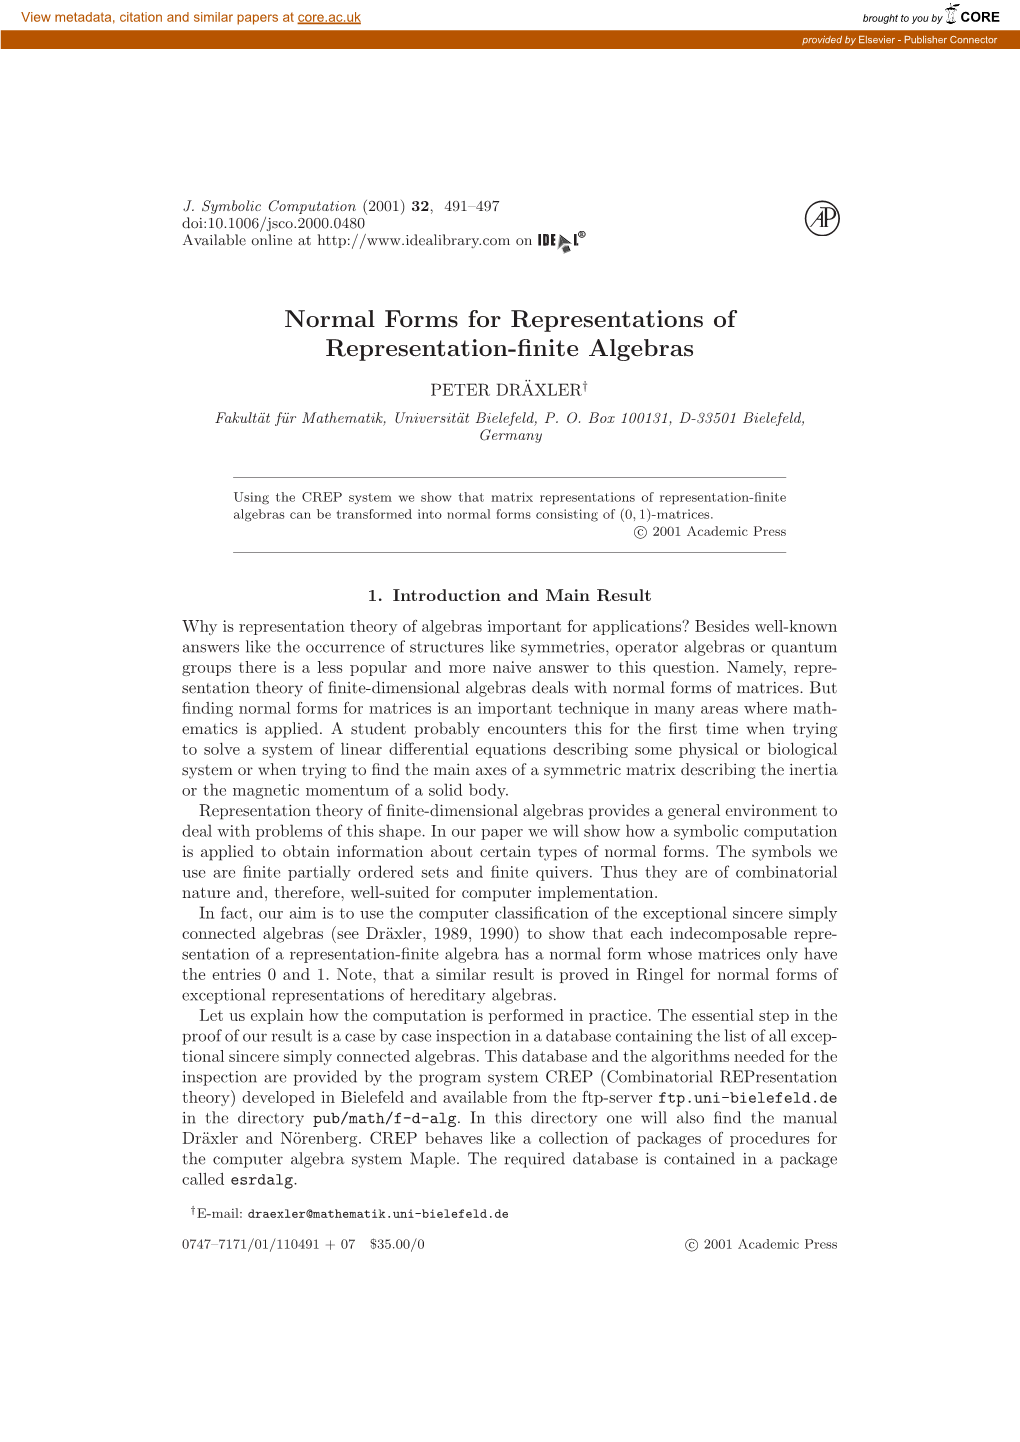 Normal Forms for Representations of Representation-Finite Algebras